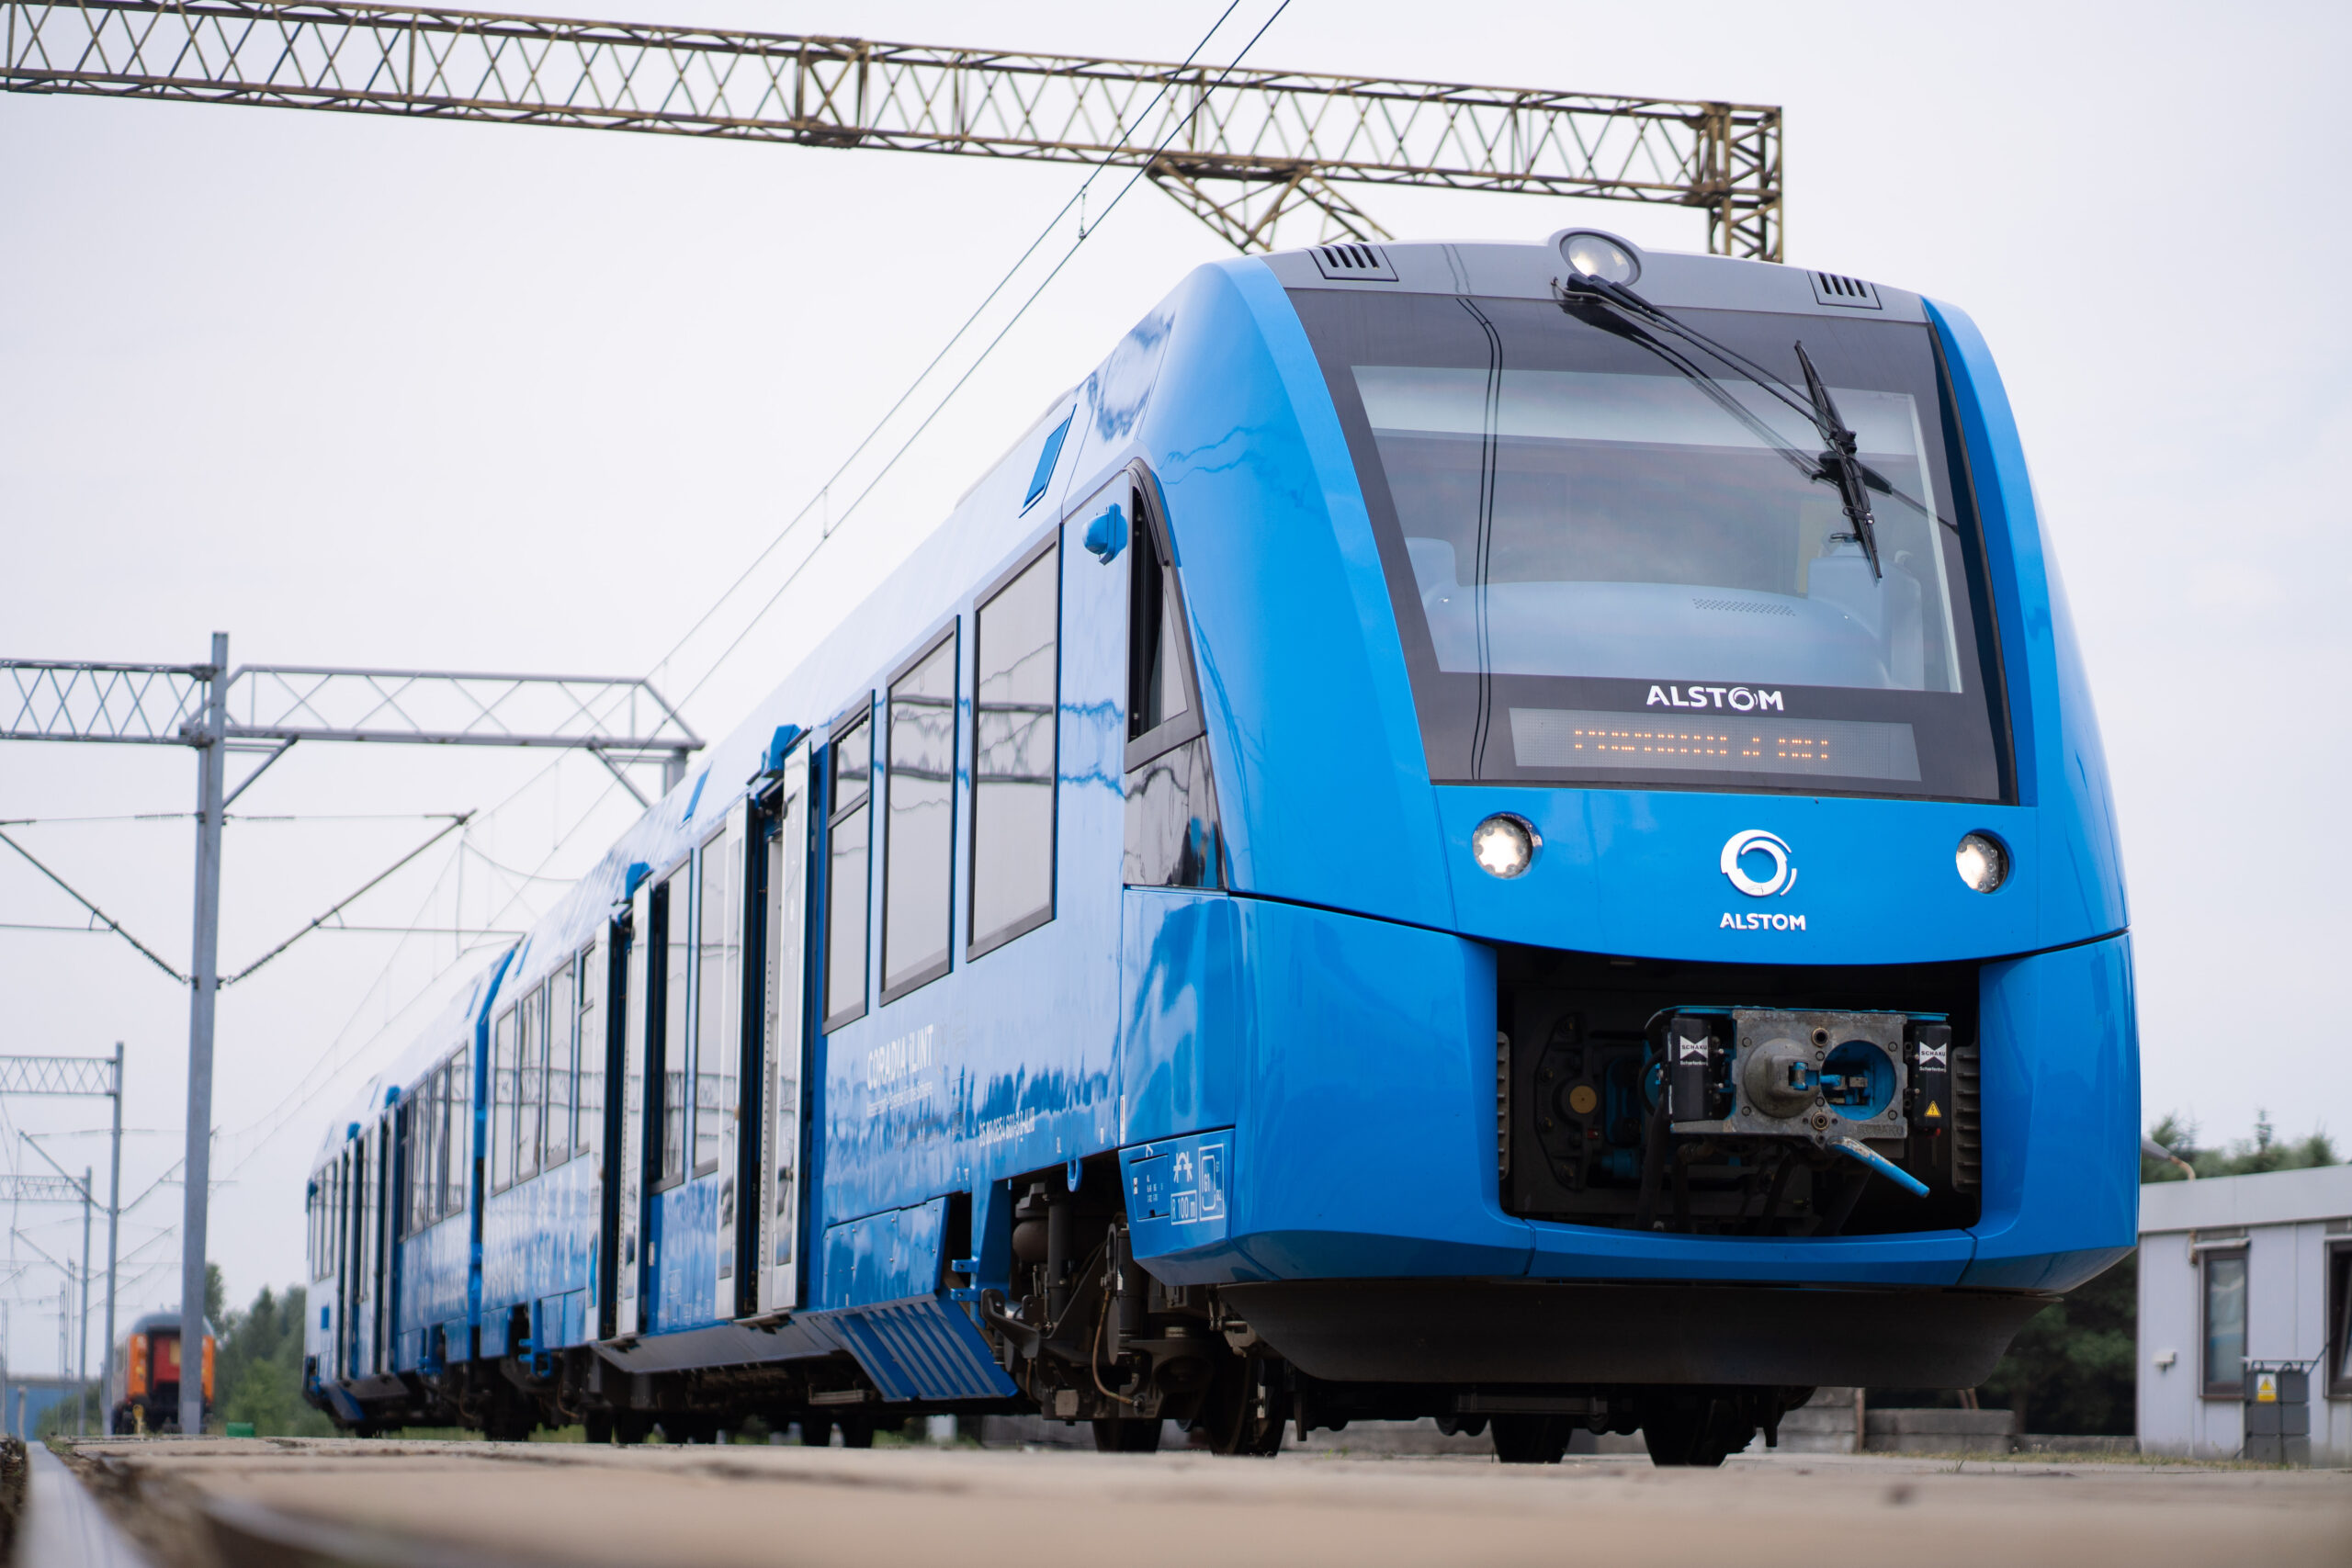 An Alstom Coradia iLint hydrogen train at the Zmigrud test track in Poland